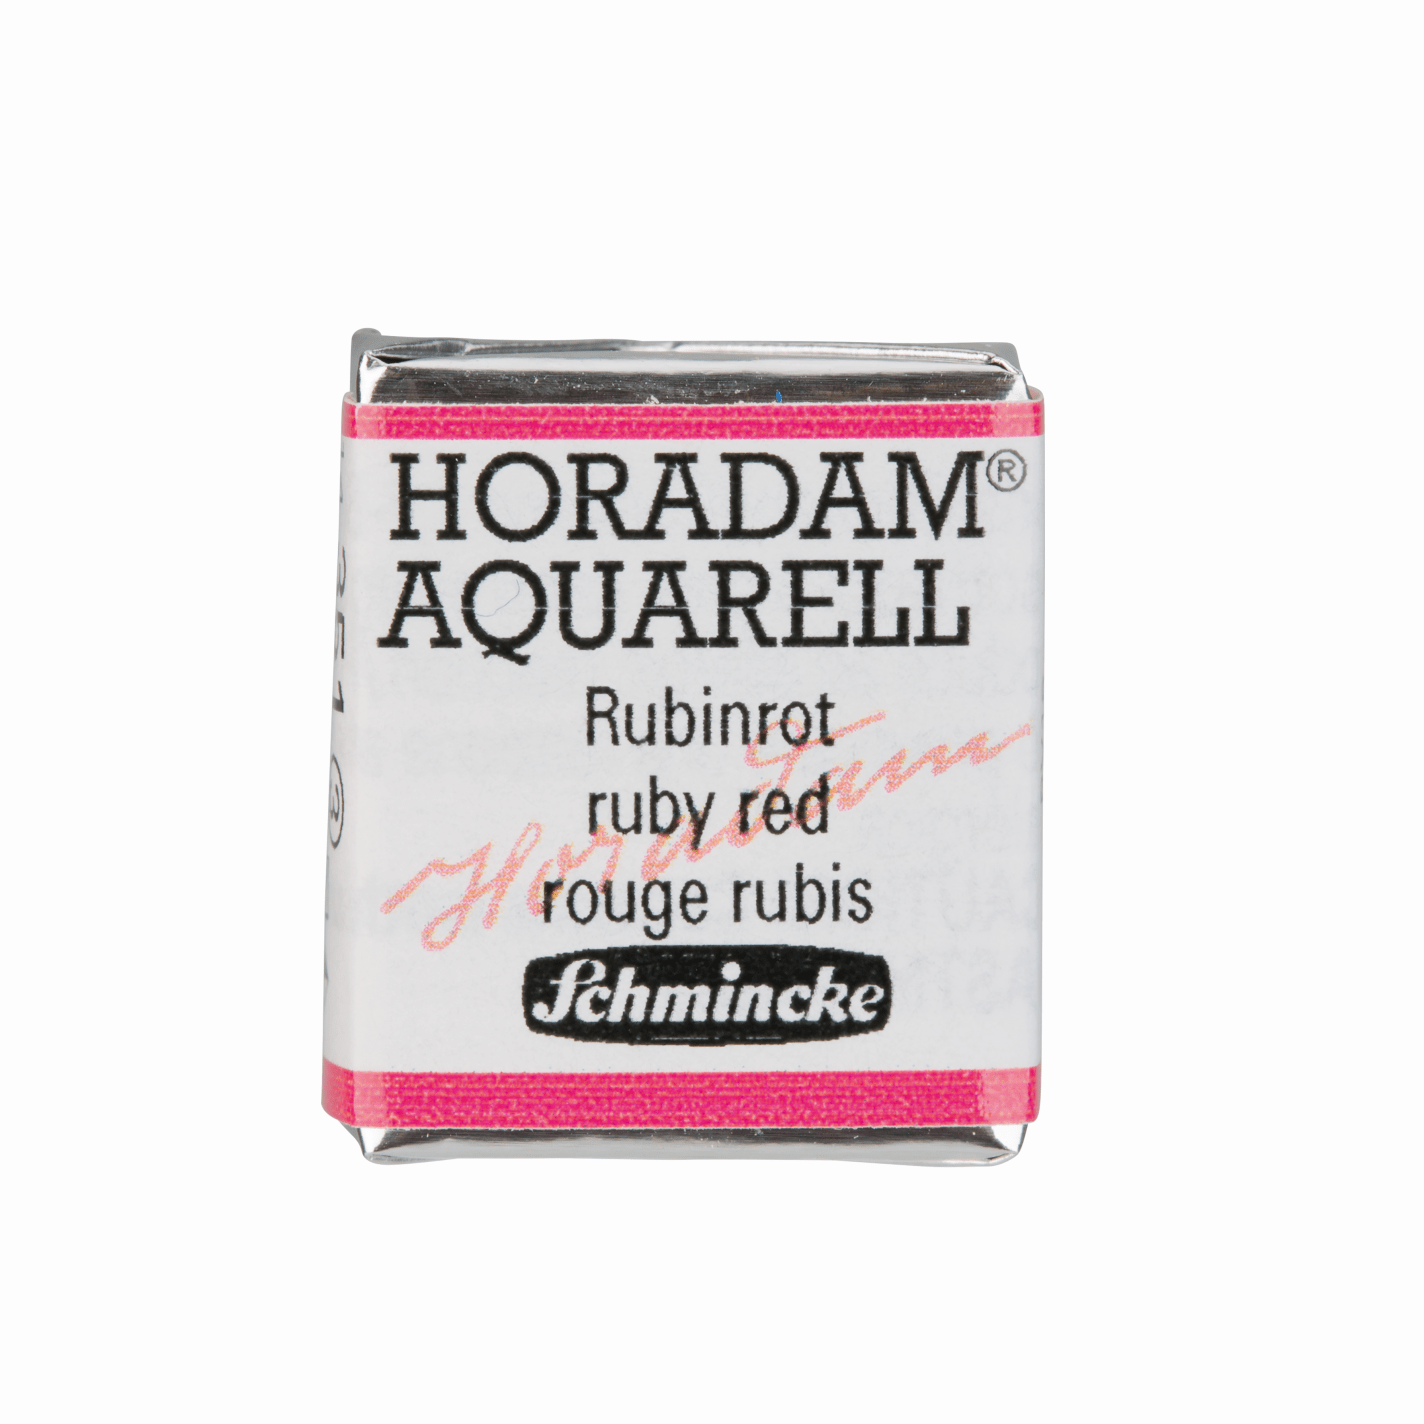 Schmincke Horadam Aquarell pans 1/2 pan Ruby Red